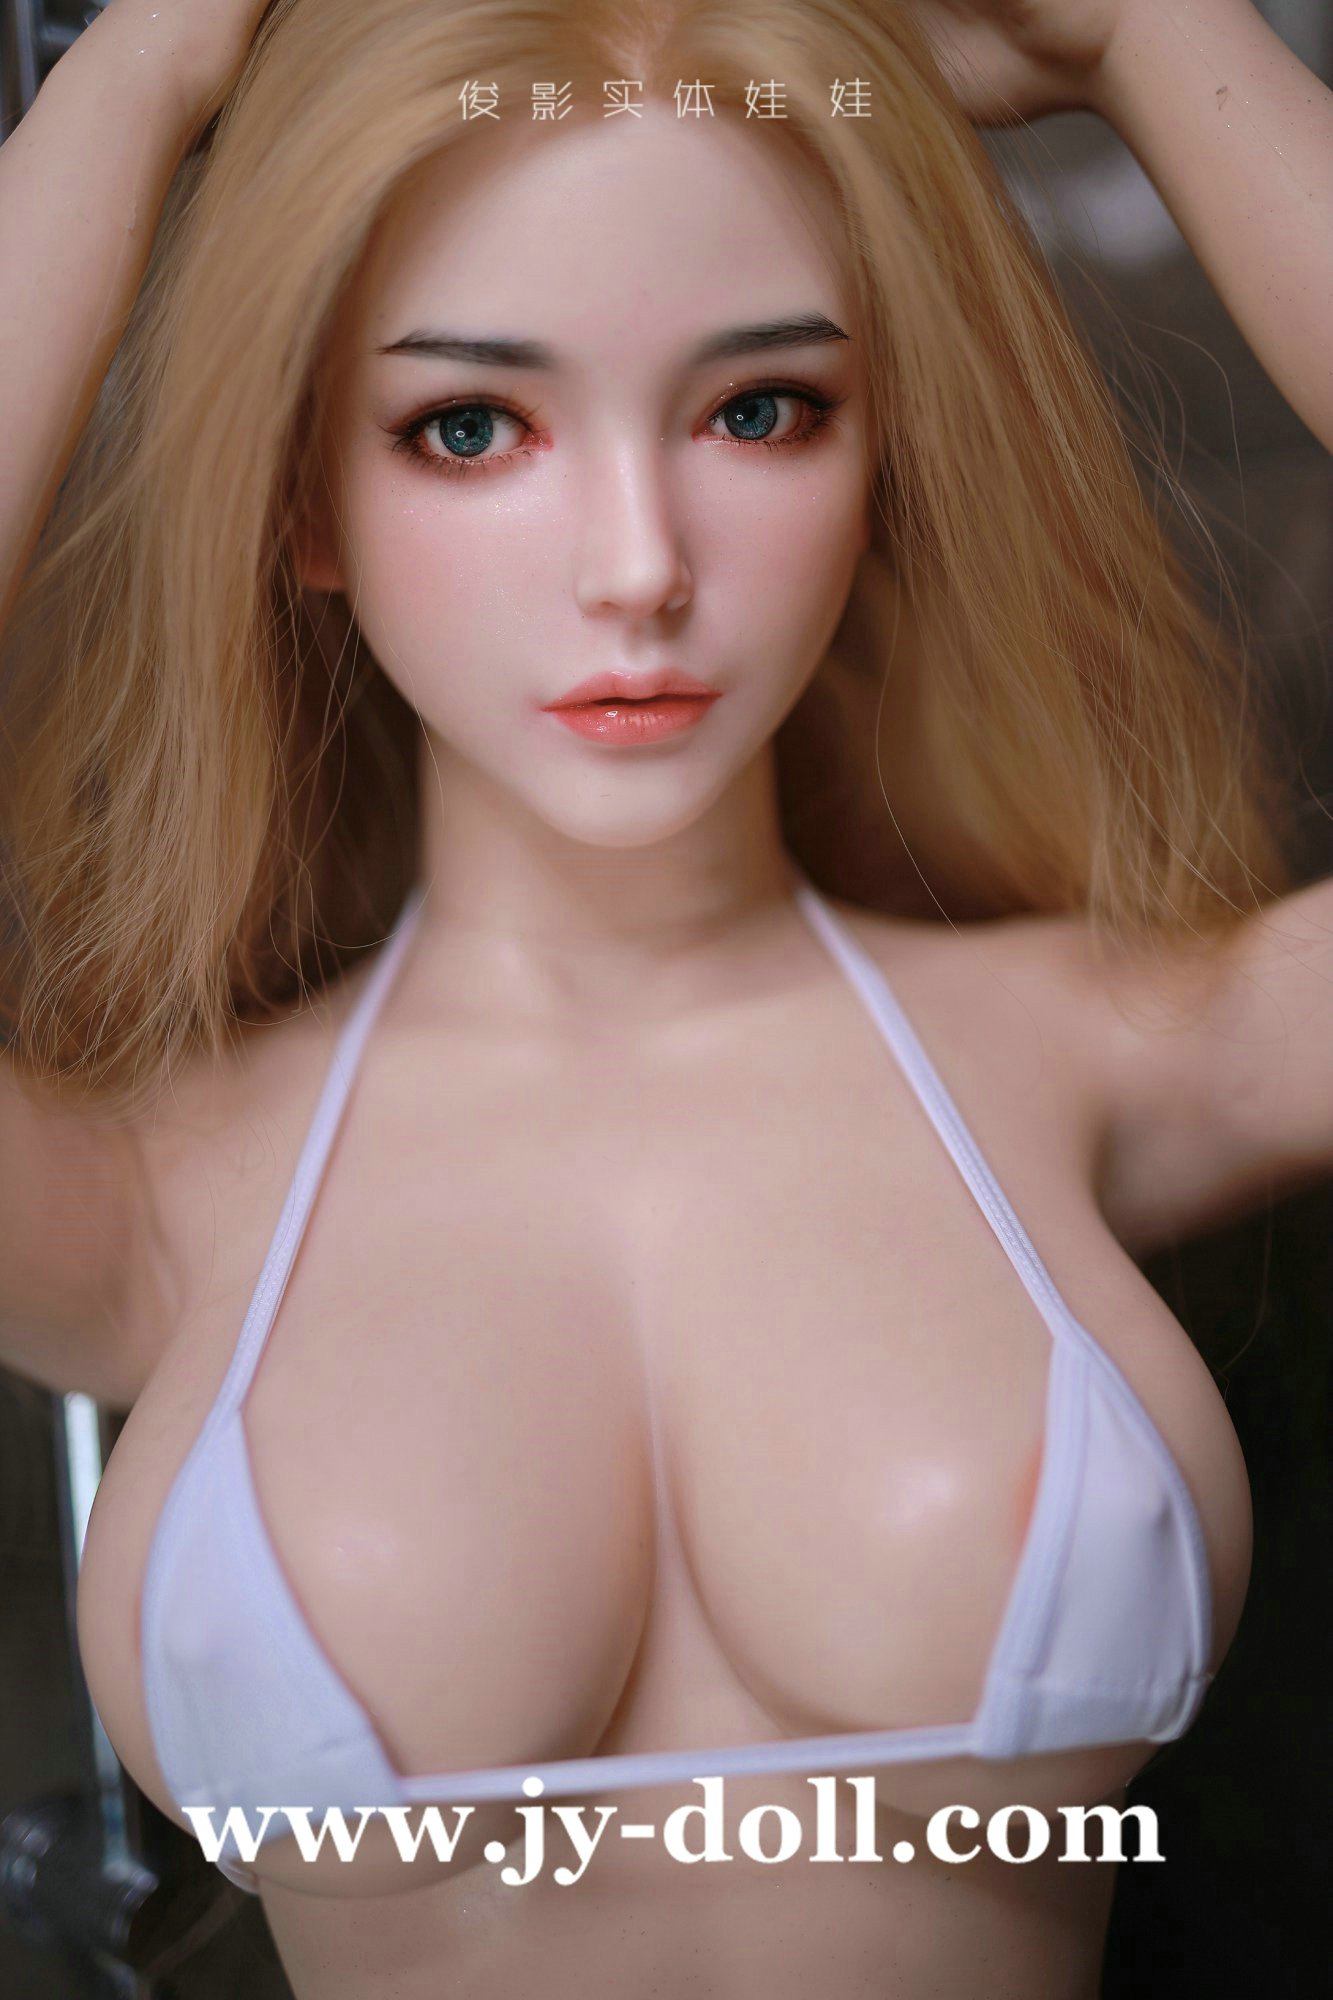 JY Doll 163cm full silicone doll Natali sex toy